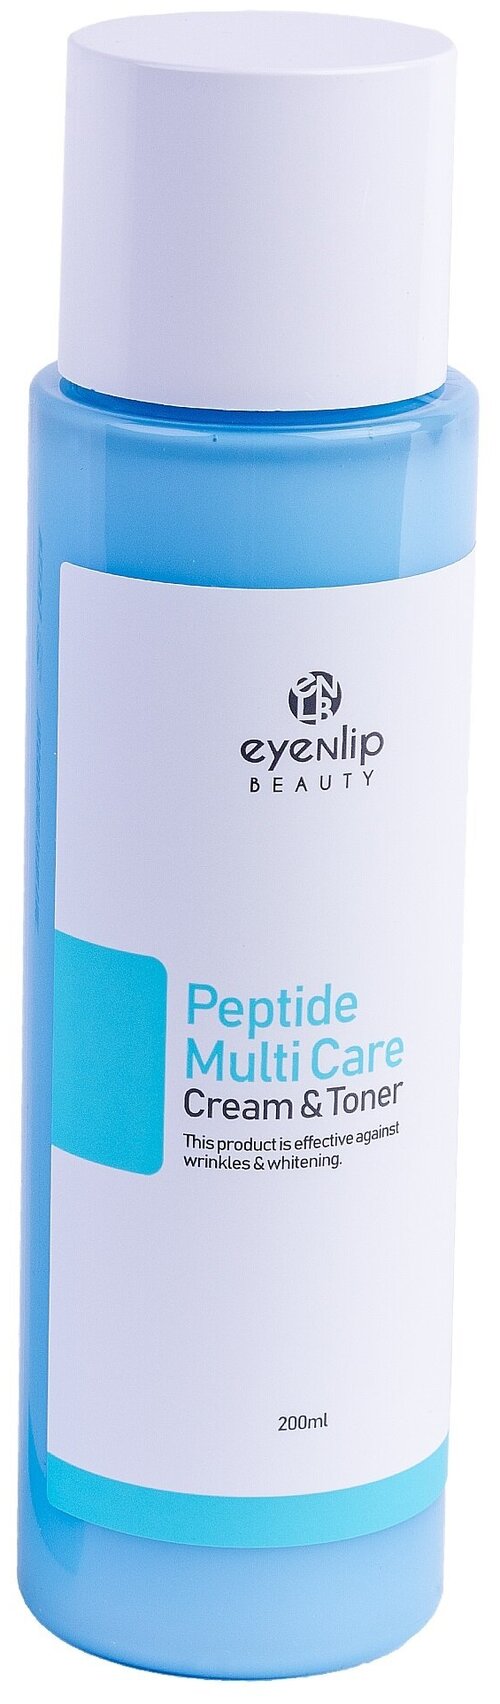 Eyenlip Peptide Multi Care Cream & Toner Тонер-крем с пептидами для лица, 200 мл